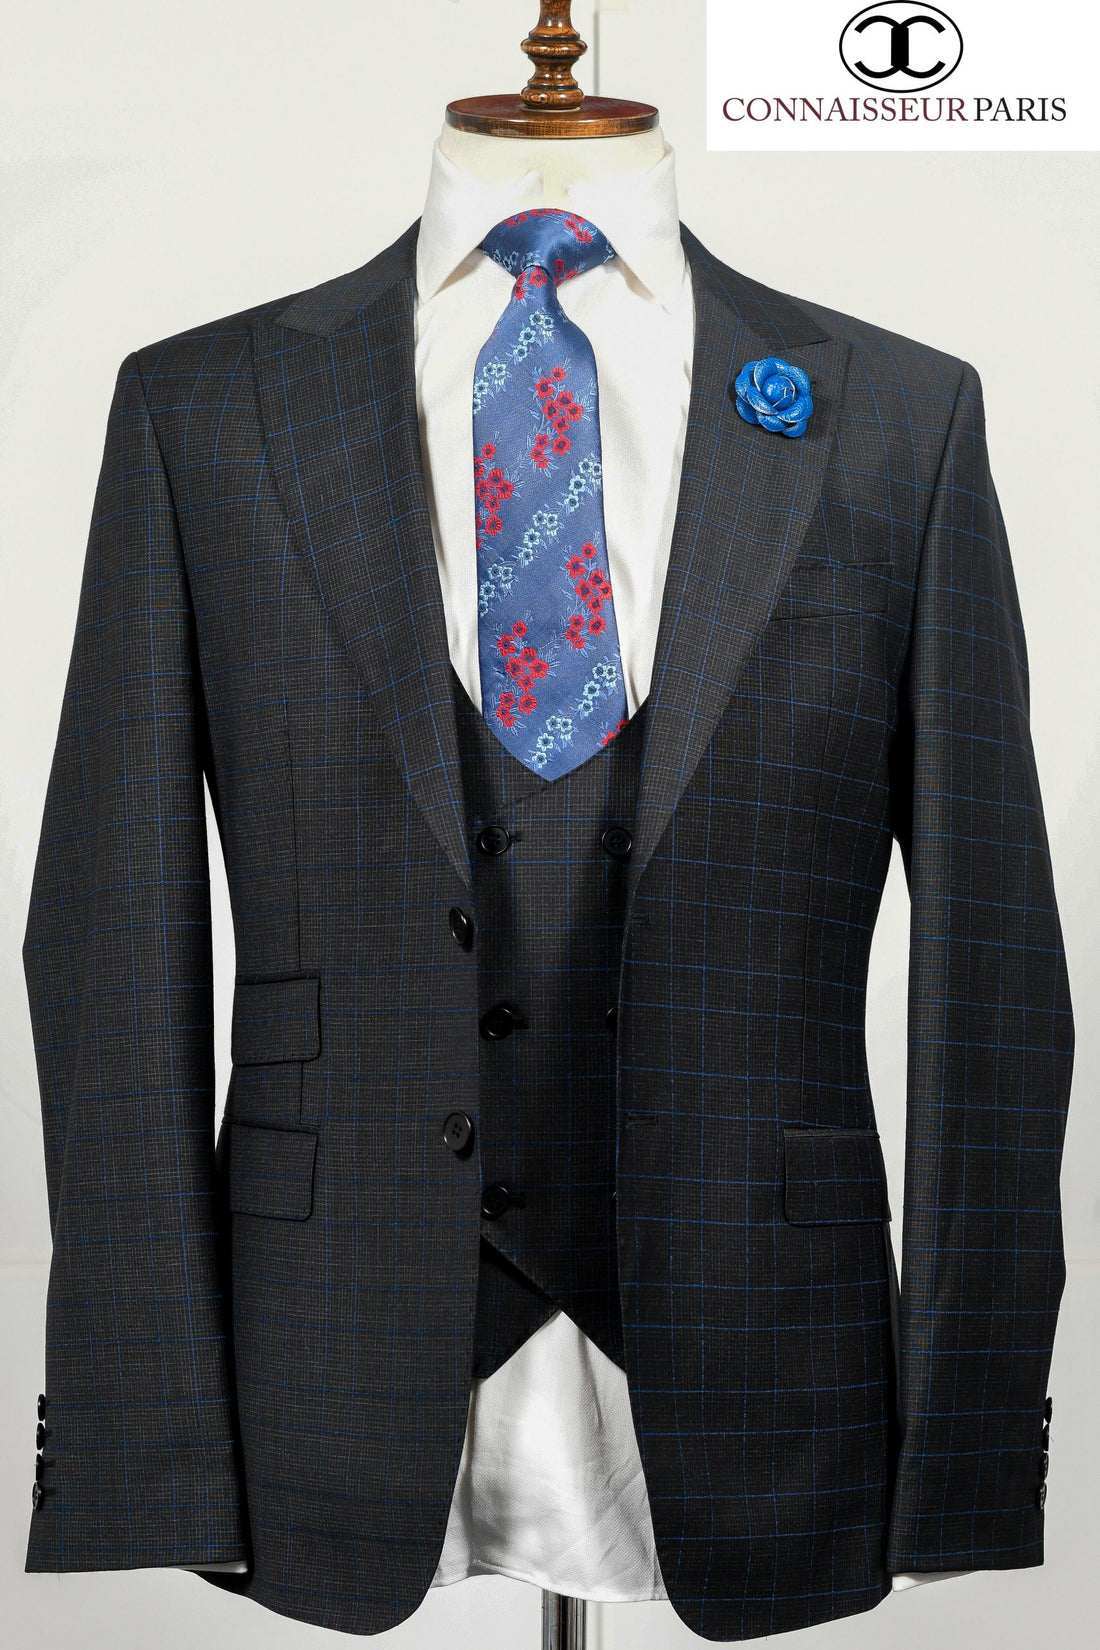 Connaisseur - Black with blue windowpane 3-piece slim fit suit with double breasted U vest